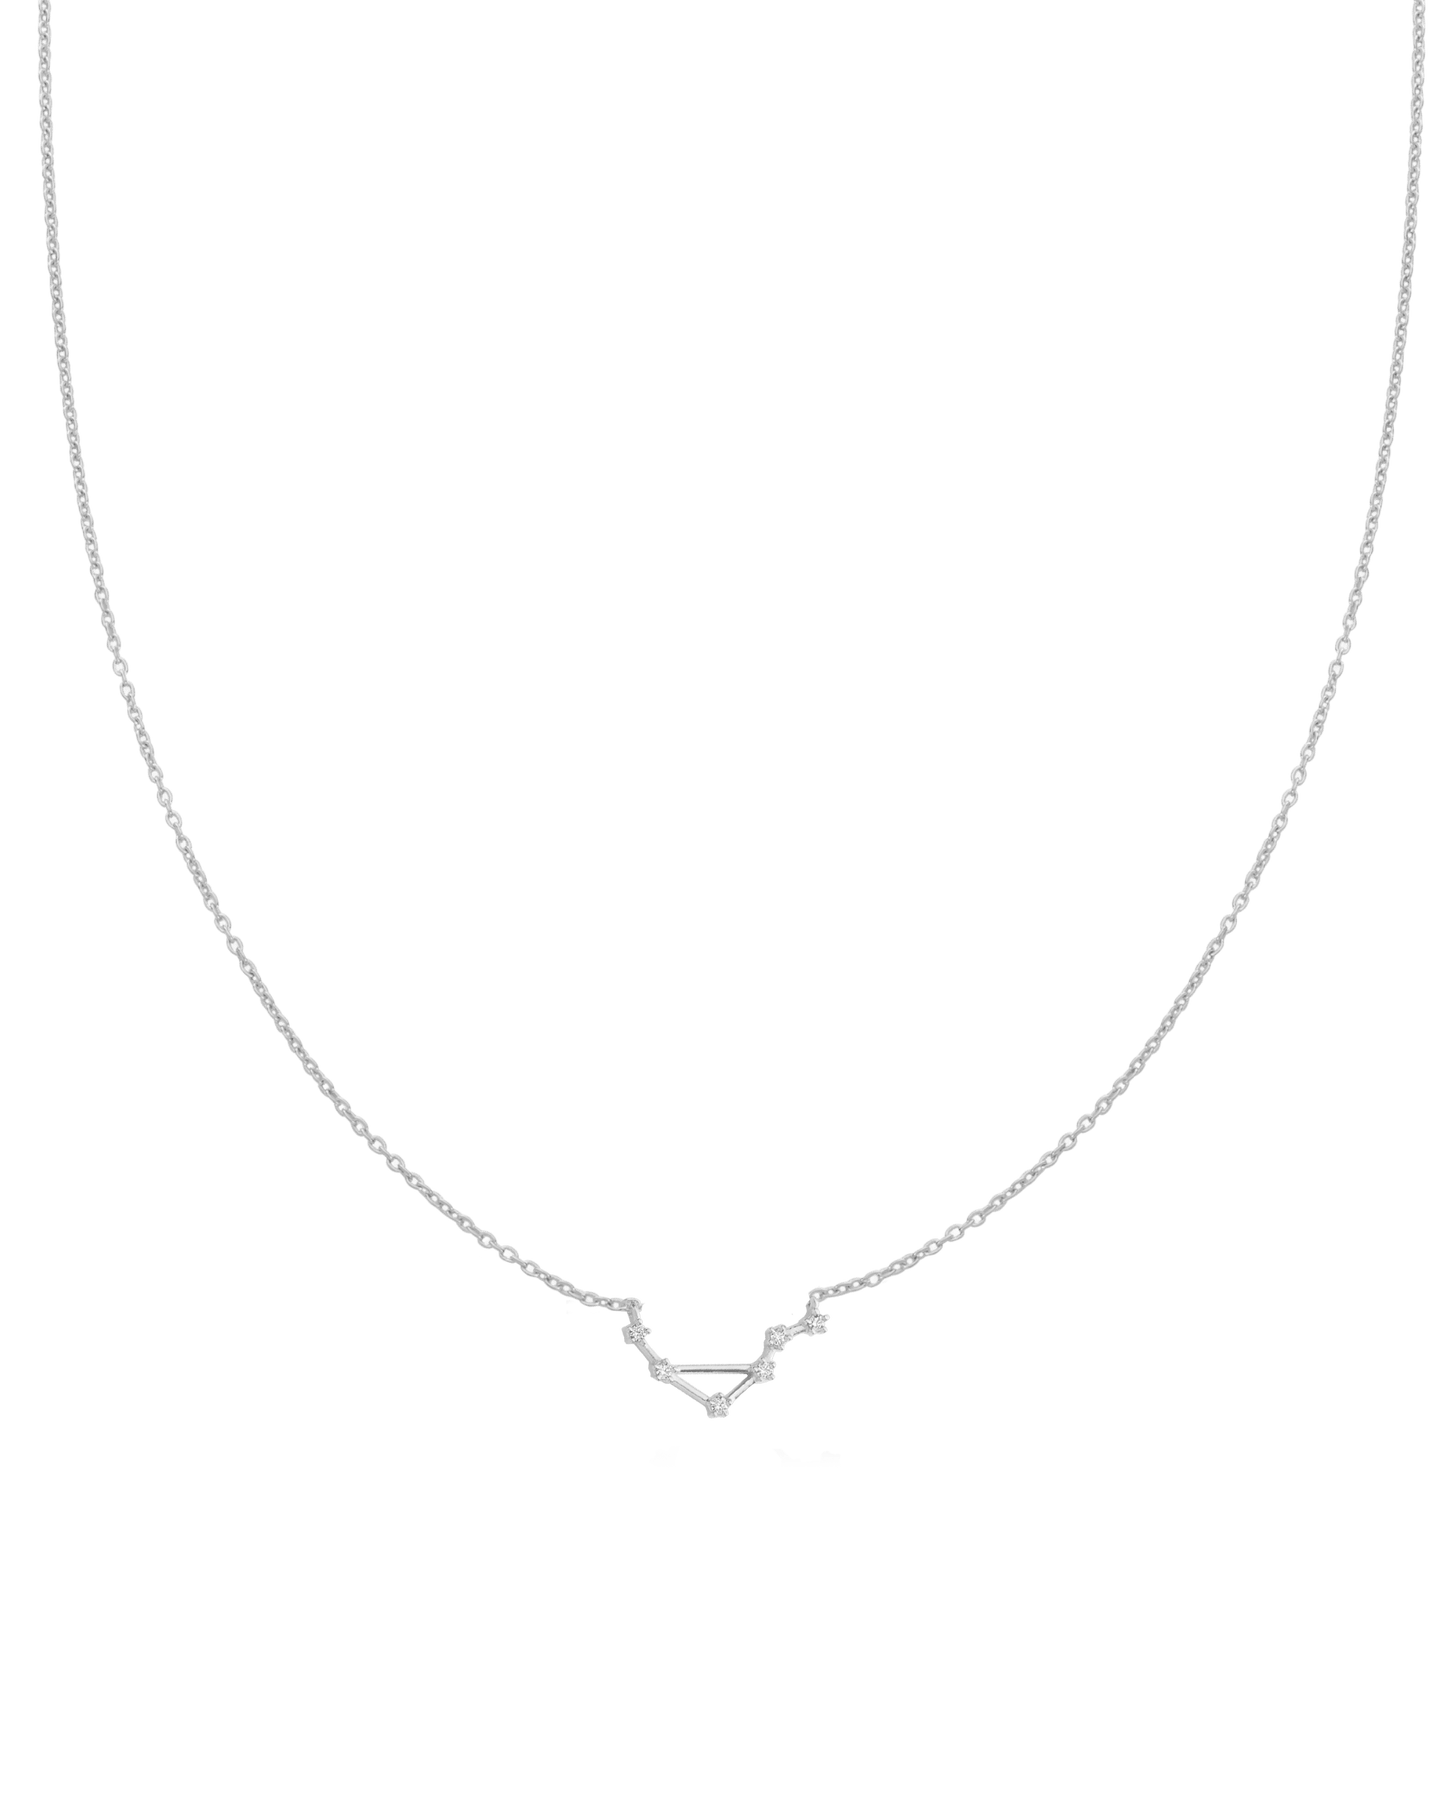 Libra Constellation Necklace - 18K Rose Vermeil Necklaces magal-dev 